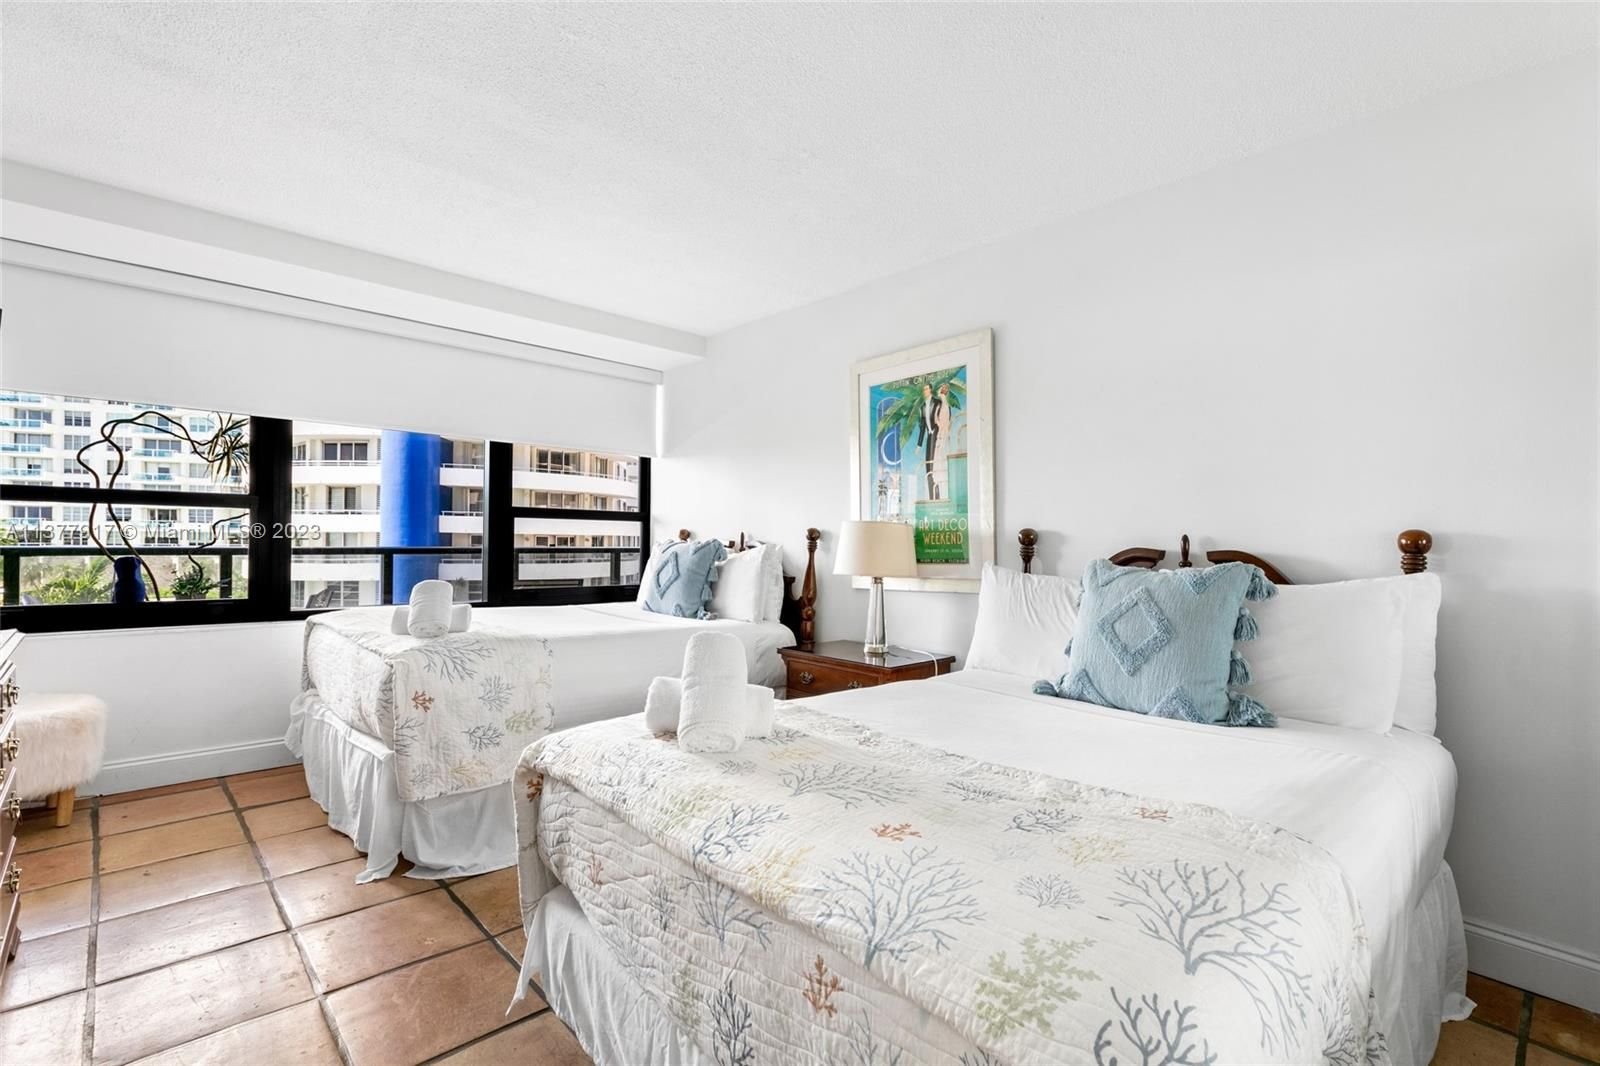 Real estate property located at 5225 Collins Ave #503, Miami-Dade County, Miami Beach, FL